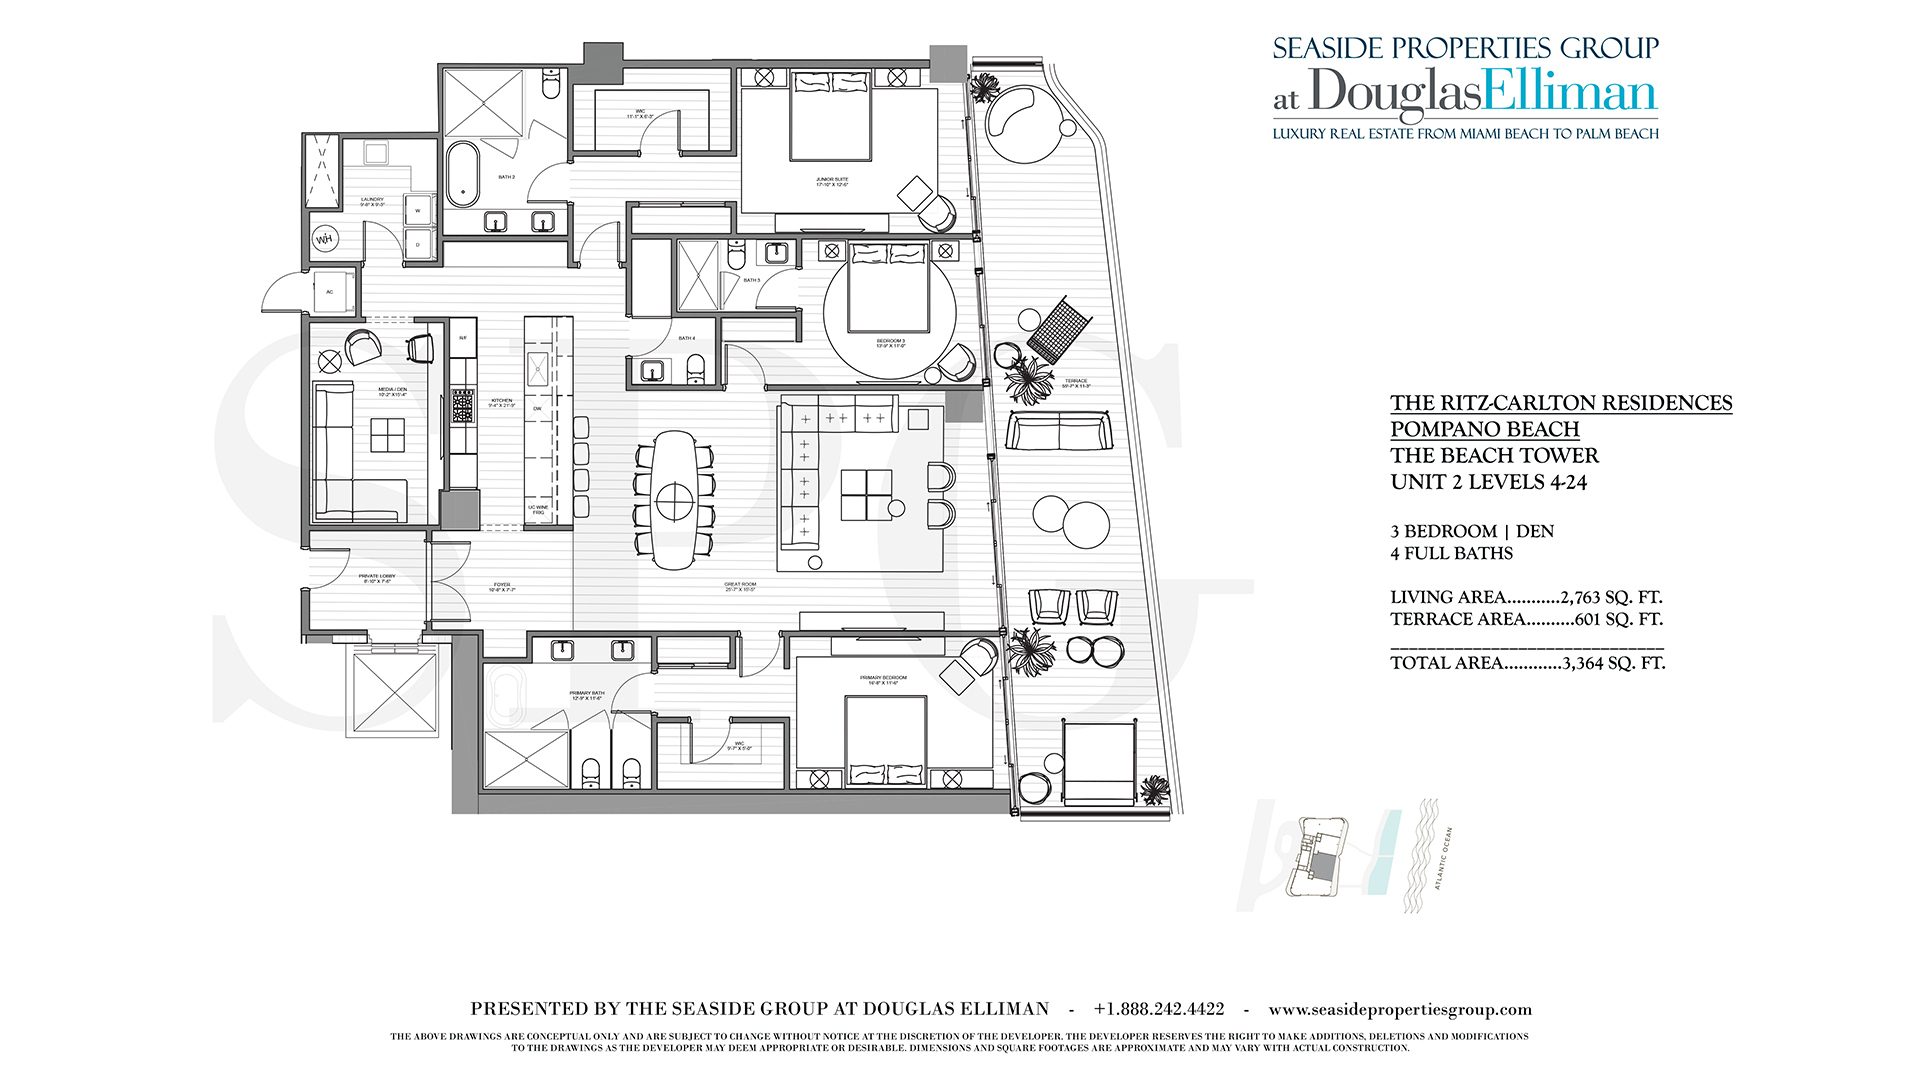 Floorplan for Unit 2 Levels 4-24